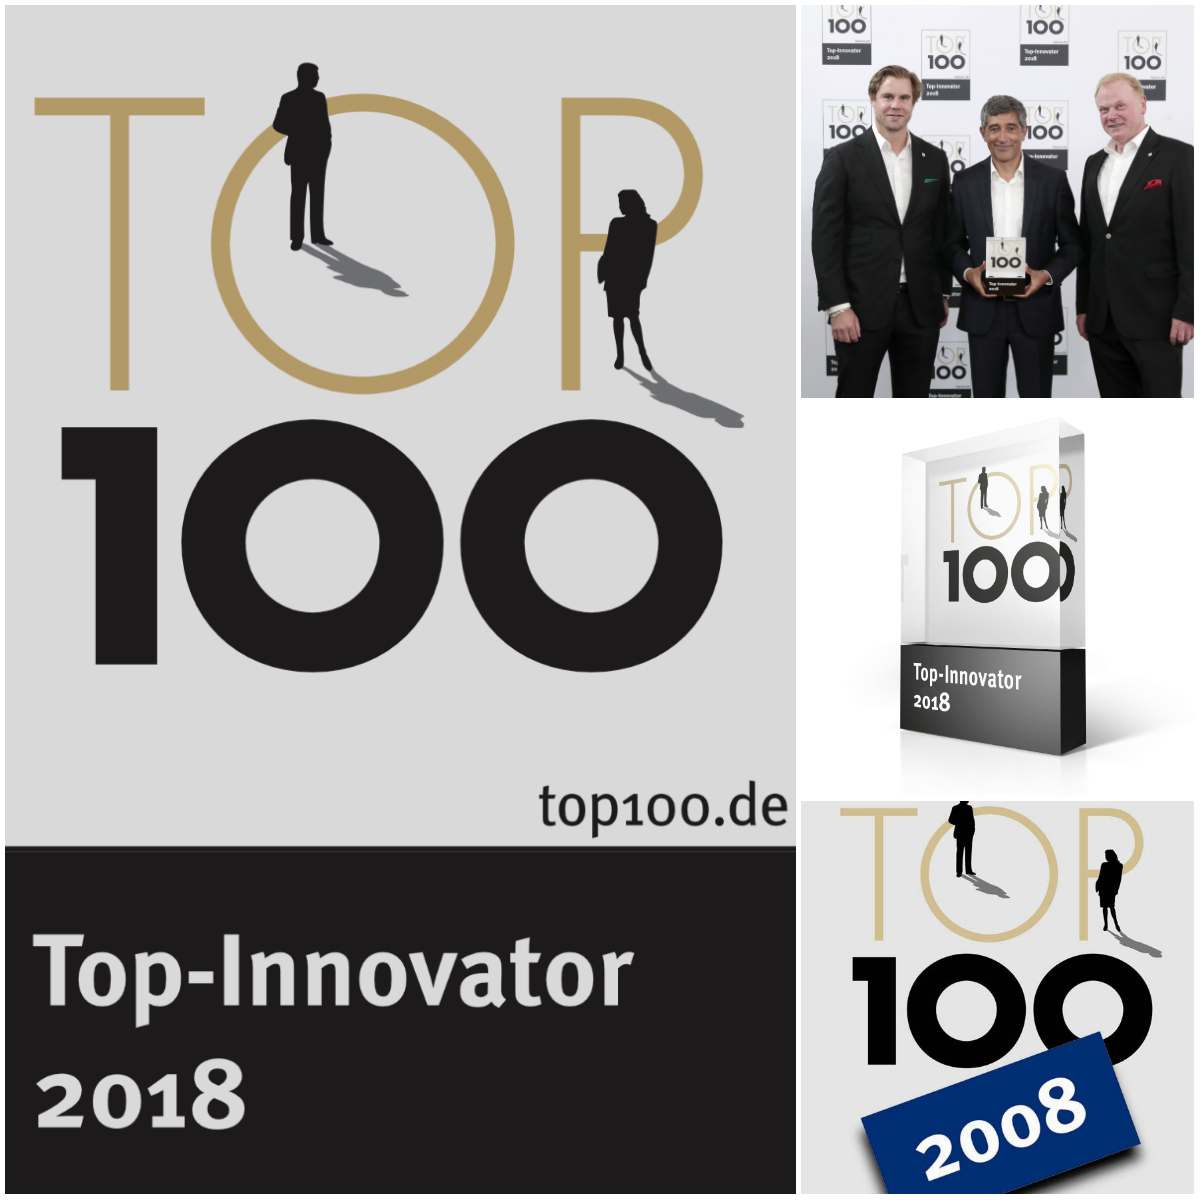 logis group top innovator 2018 und 2008